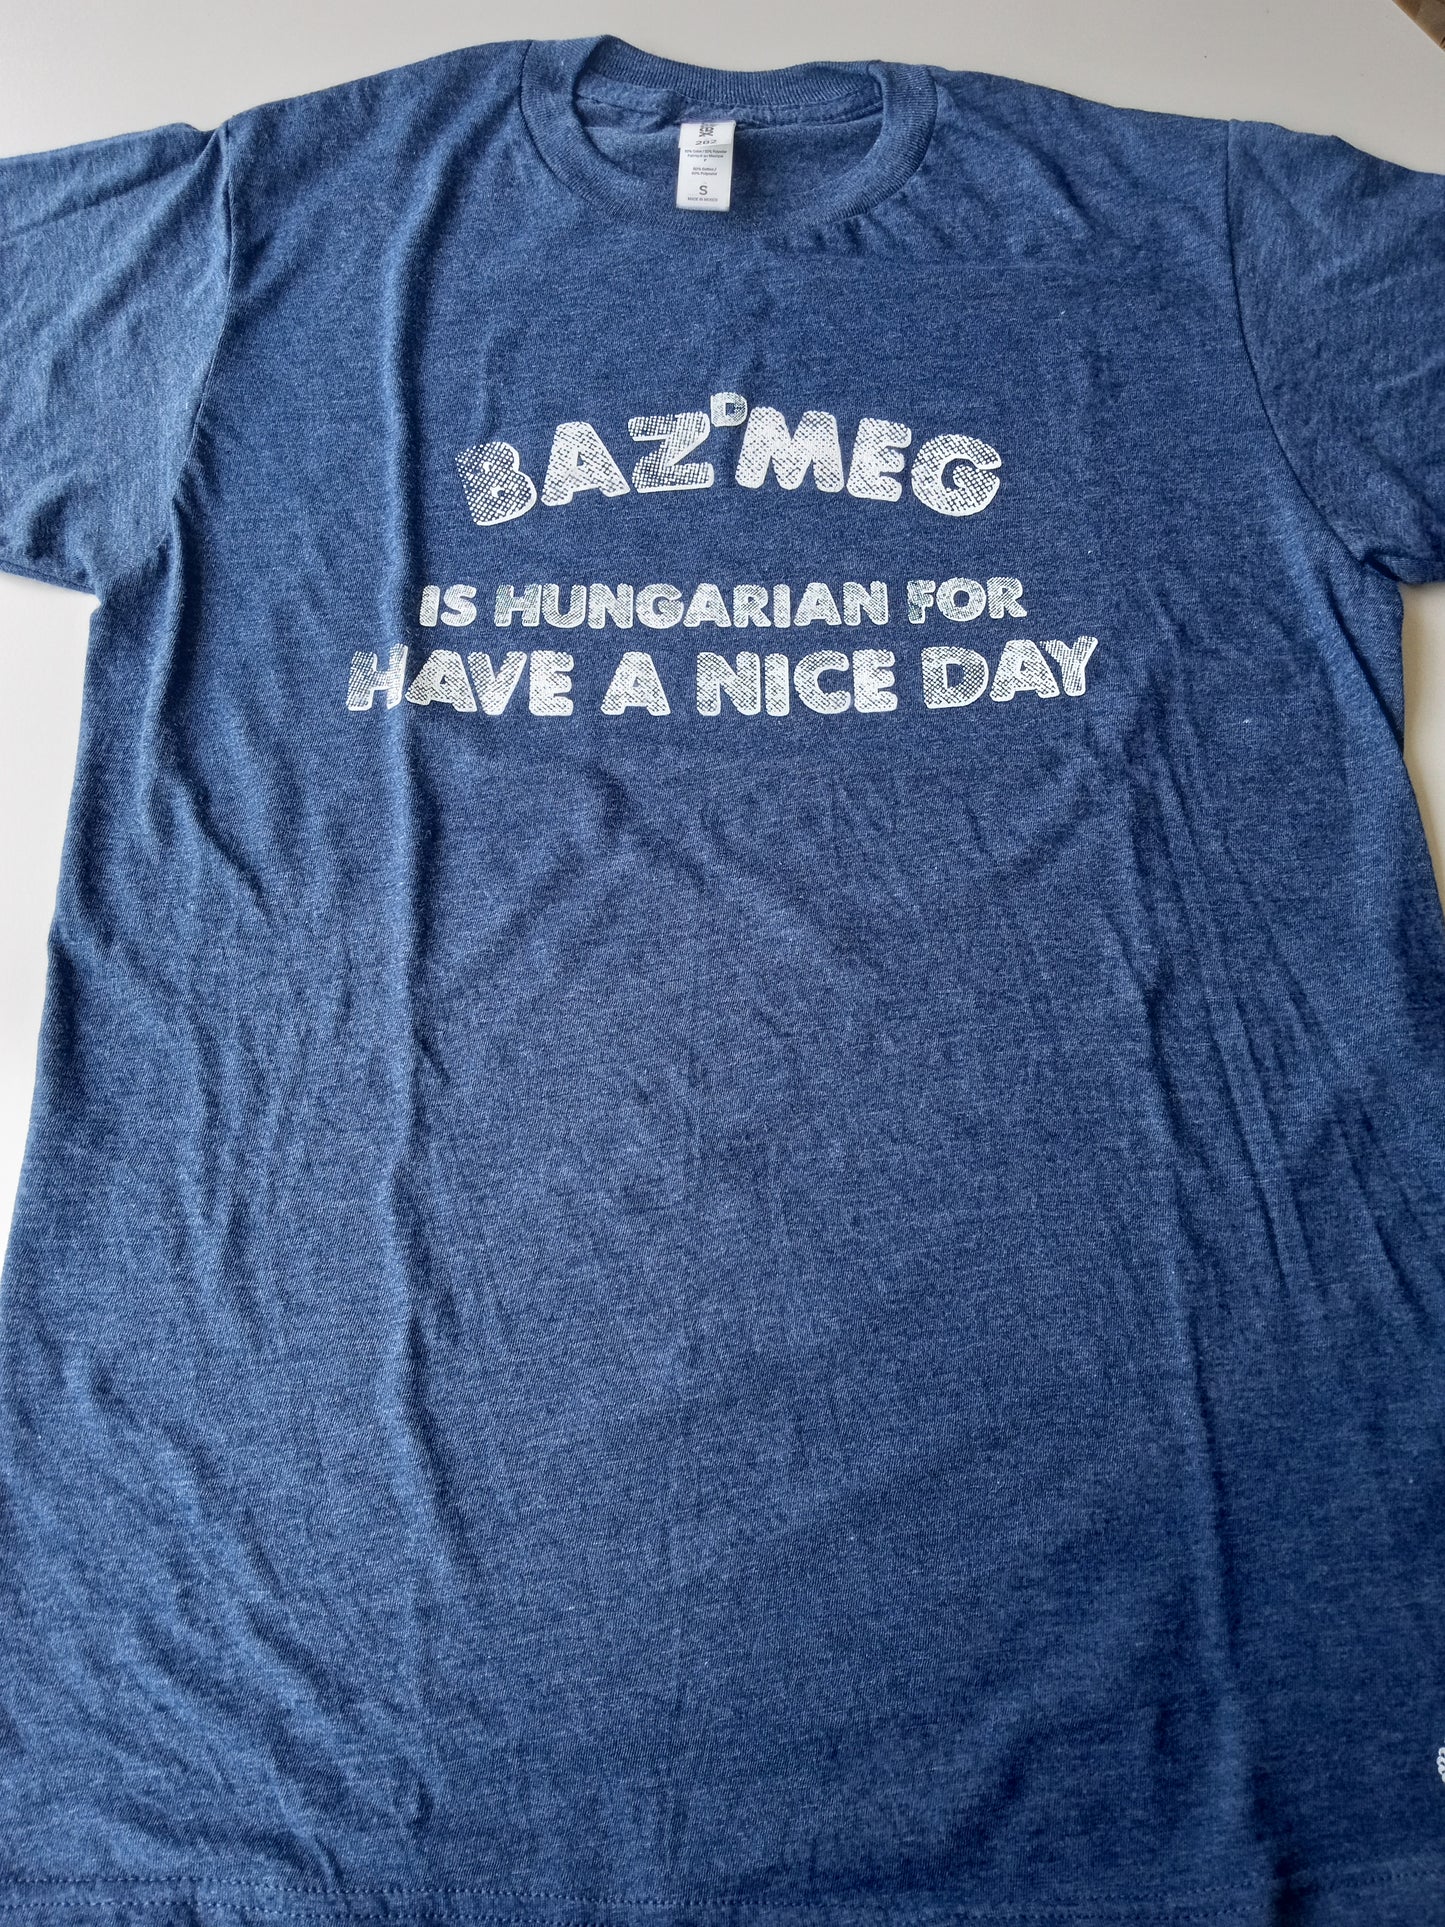 Bazdmeg Hngarian Fun Shirt